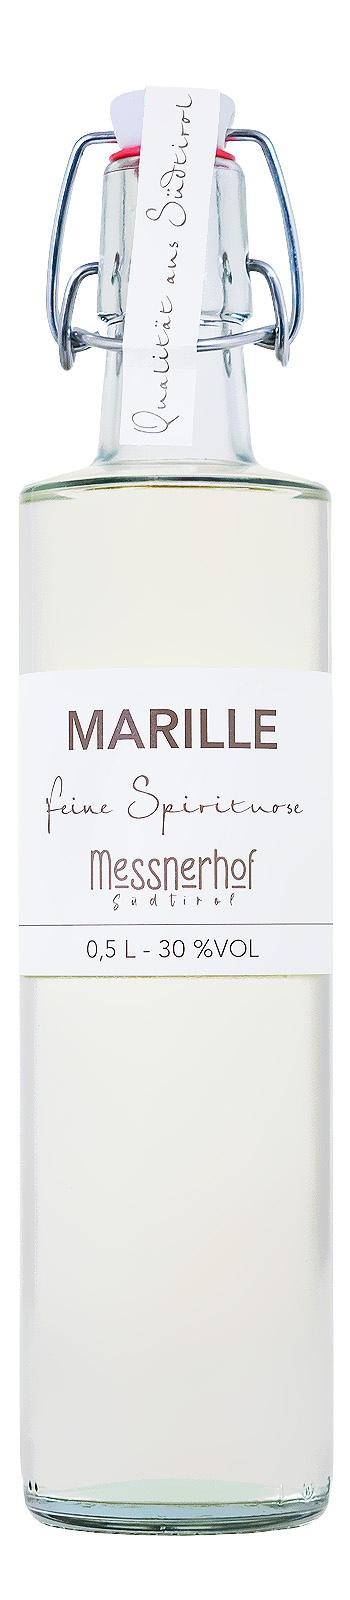 Messnerhof Feine Marille Spirituose - 0,5L 30% vol